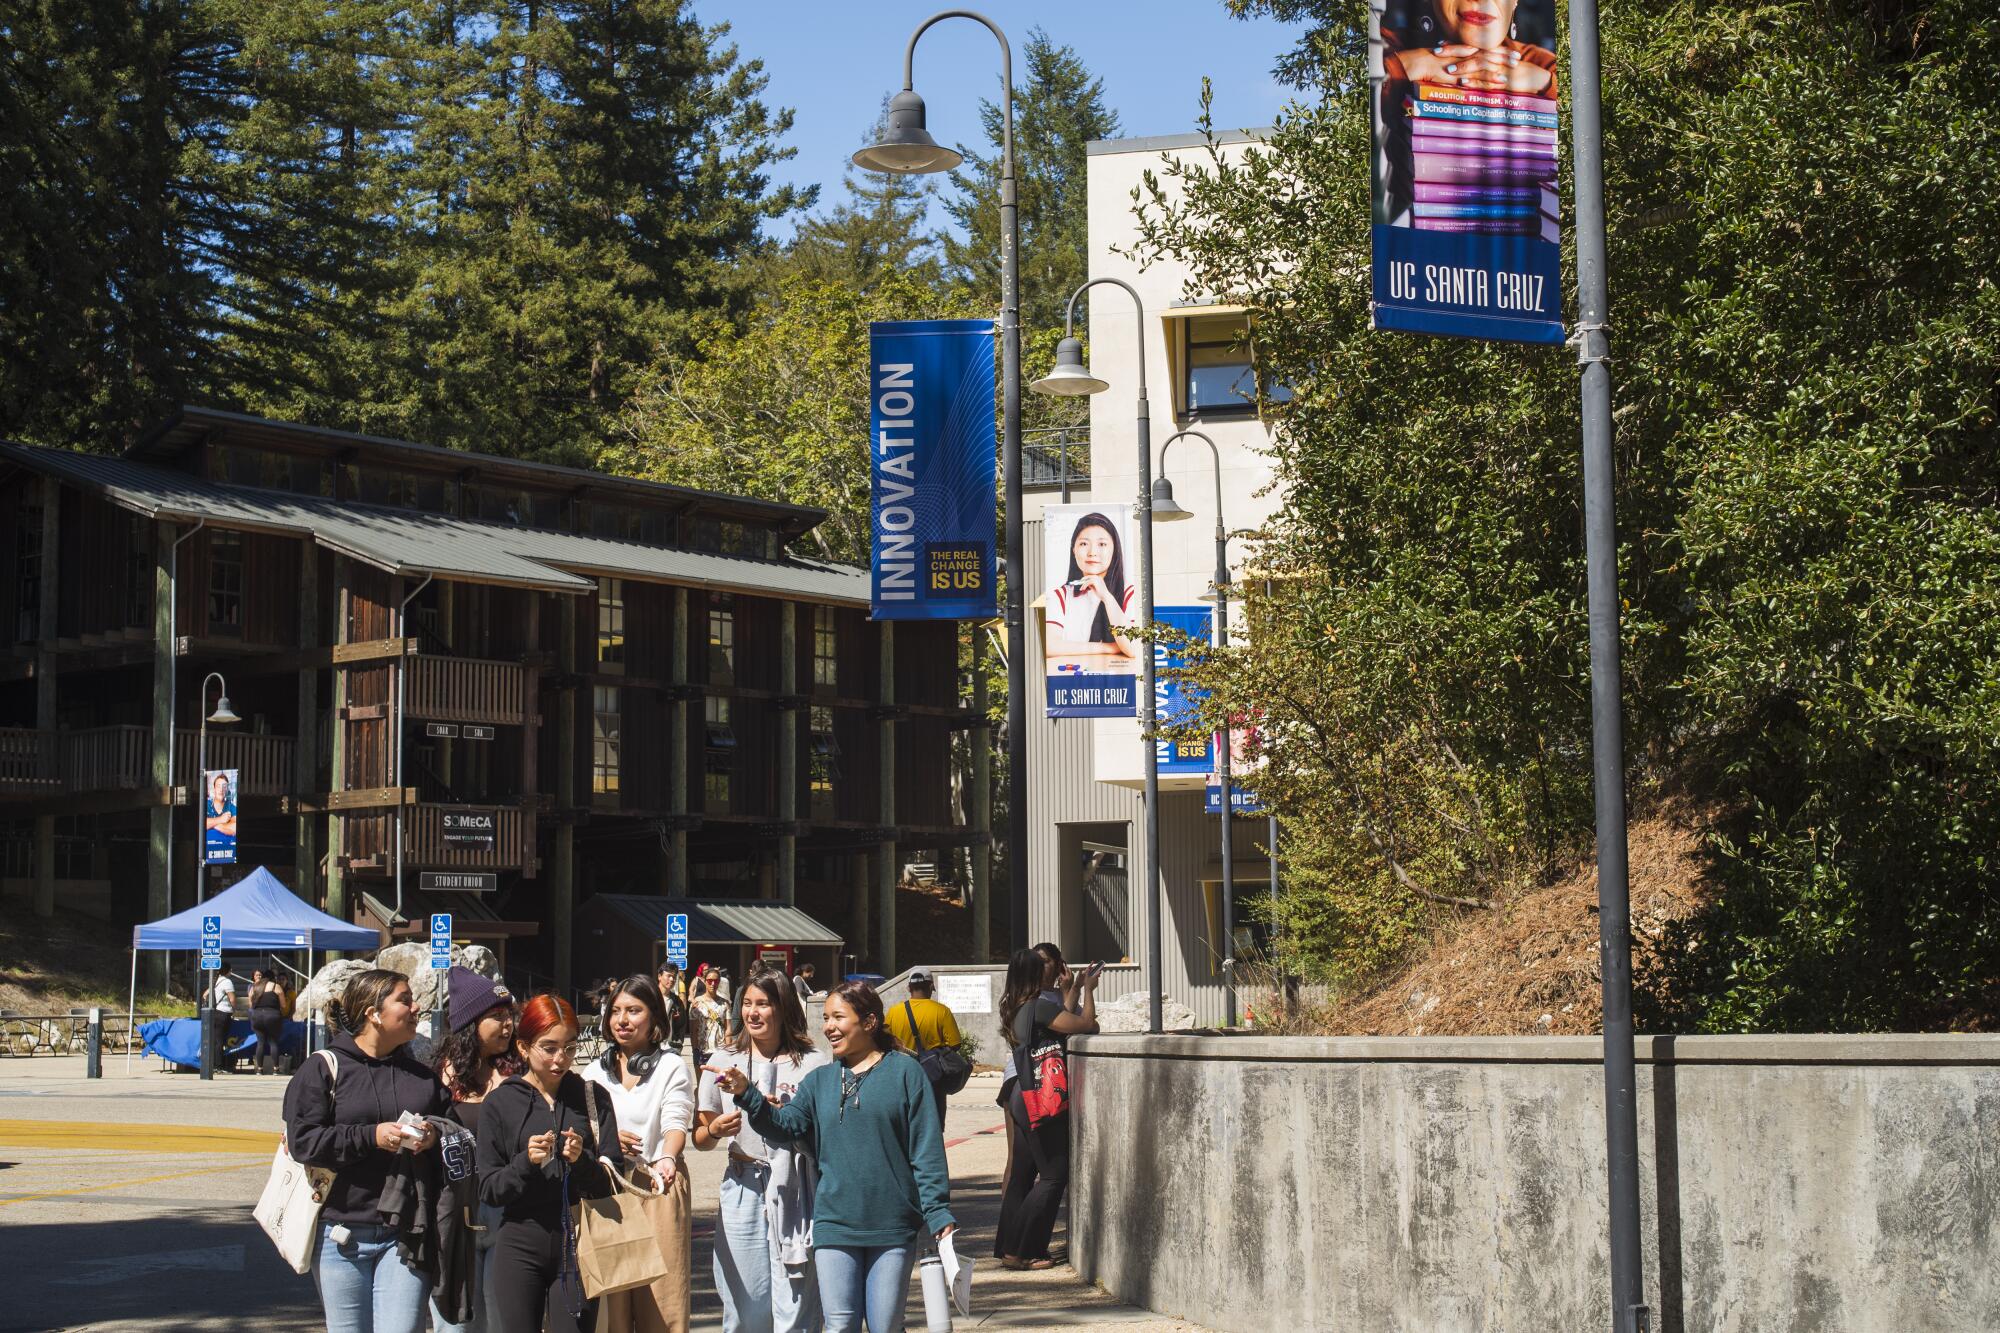 Students walk through the UC Santa Cruz campus.